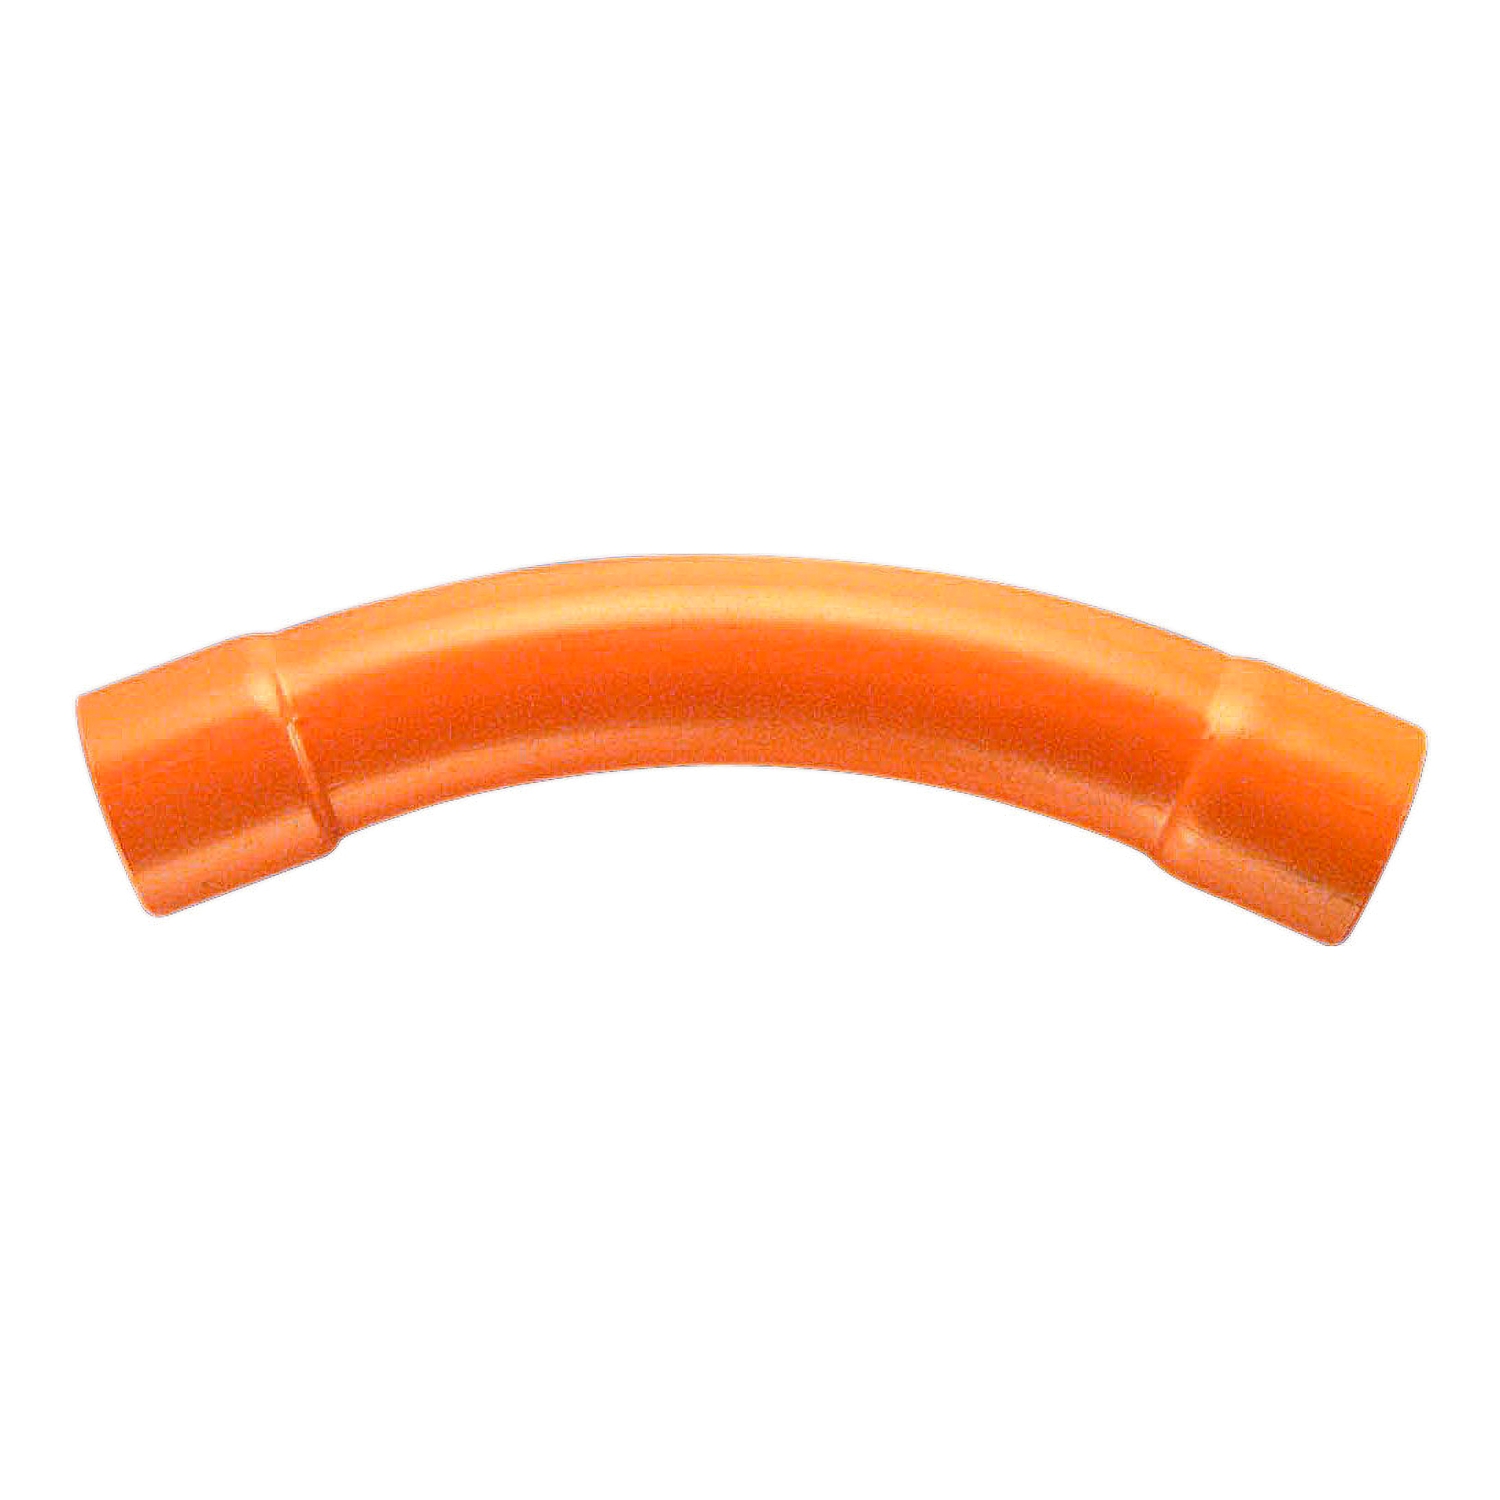 Solid Fittings - PVC, 45 Degree Heavy Duty Sweep Bends, 25mm, Orange